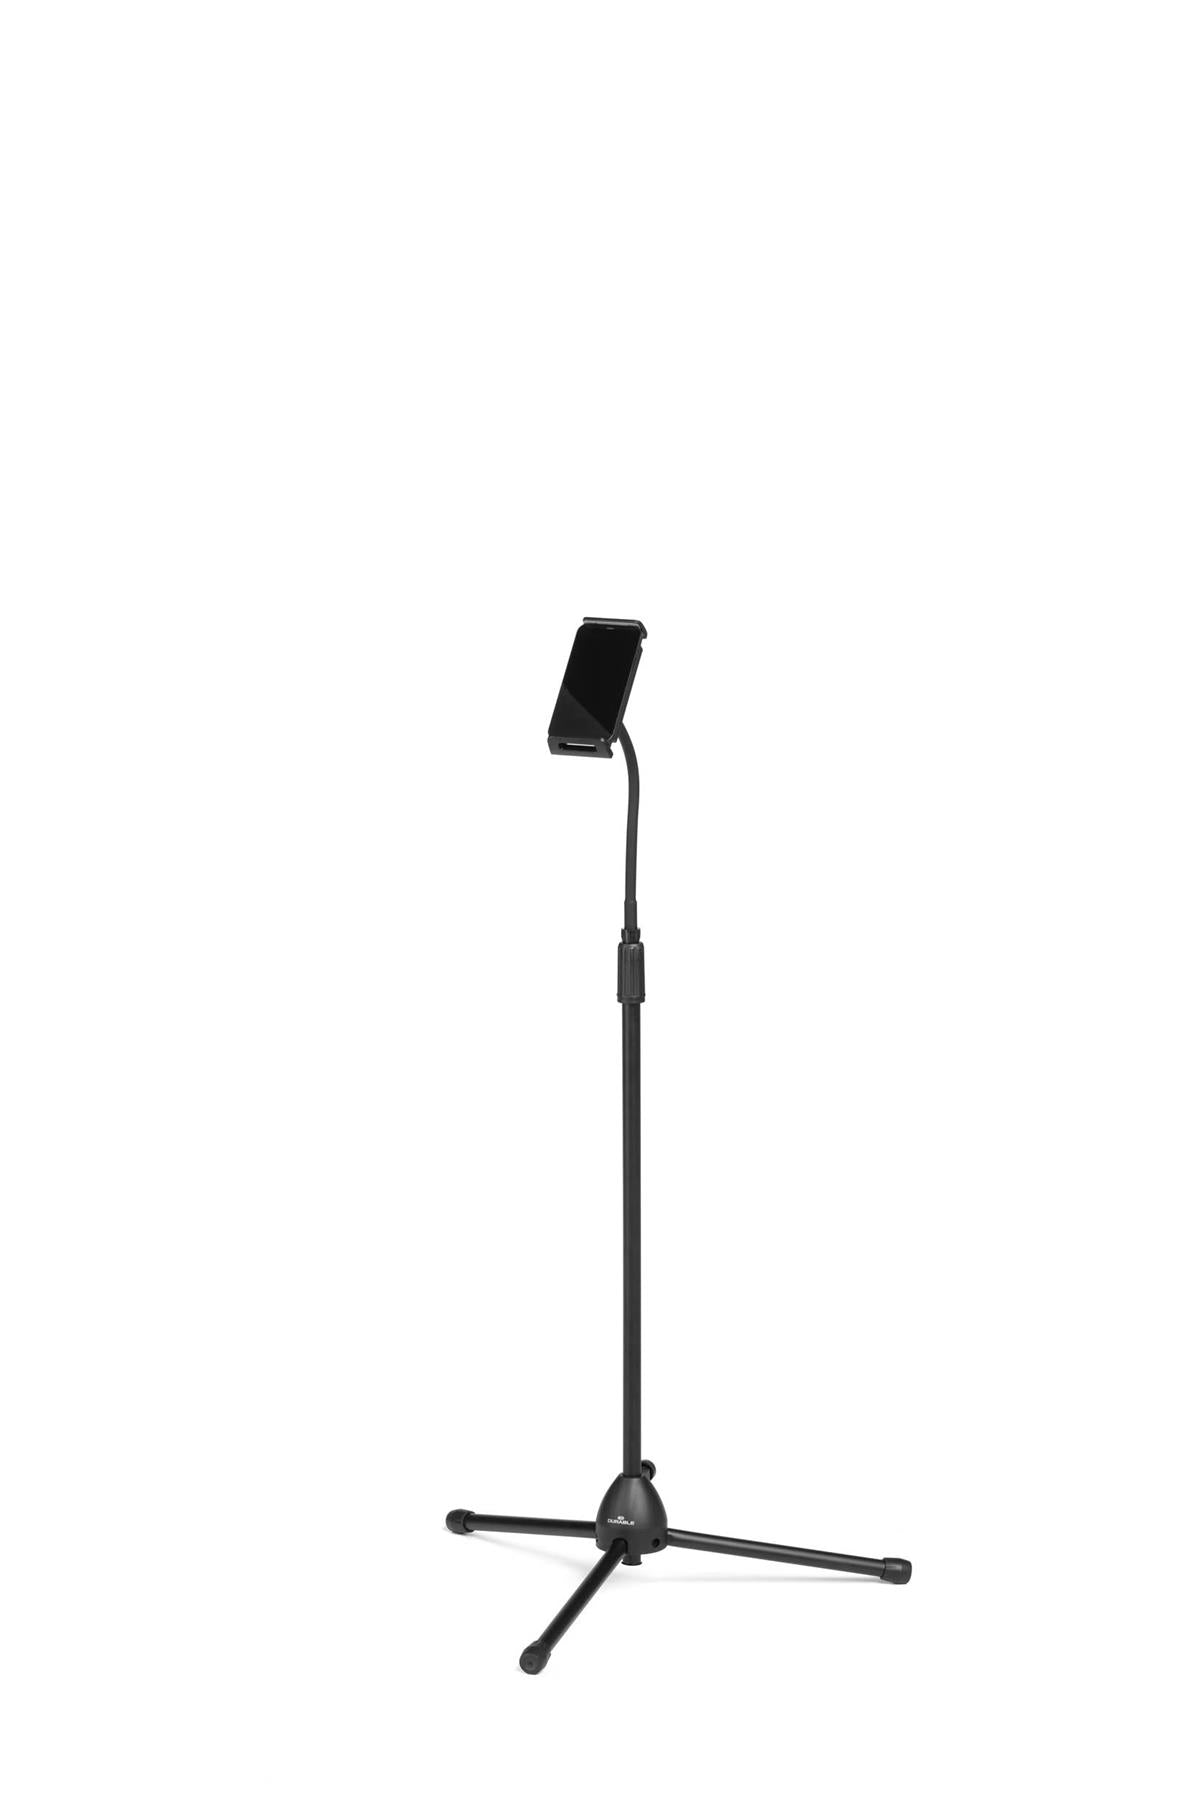 Durable TWIST Desk and Floor Gooseneck Tablet Phone Holder iPad Stands | Black